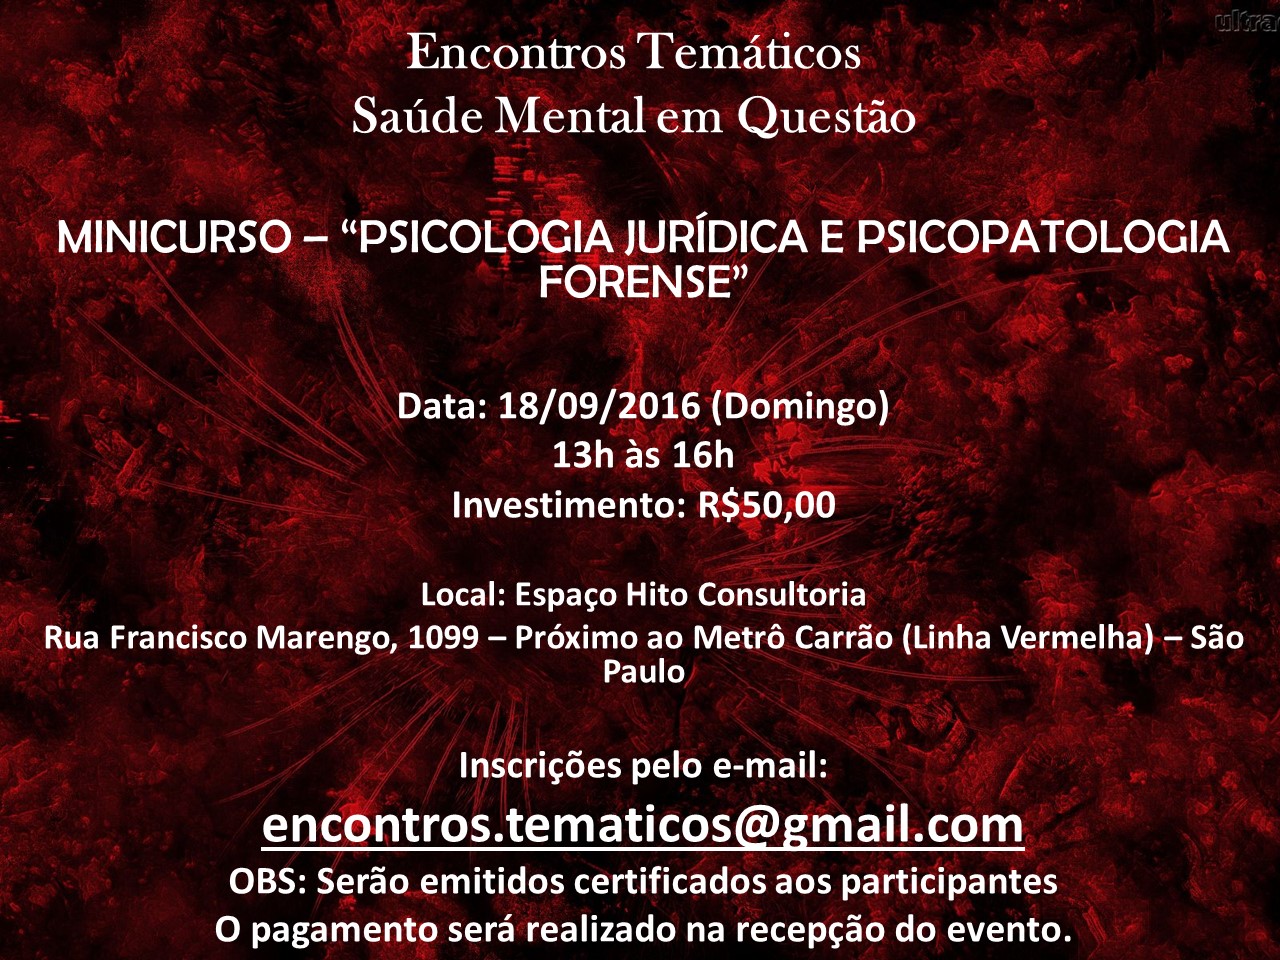 Minicurso "Psicologia Criminal e Psicopatologia Forense"